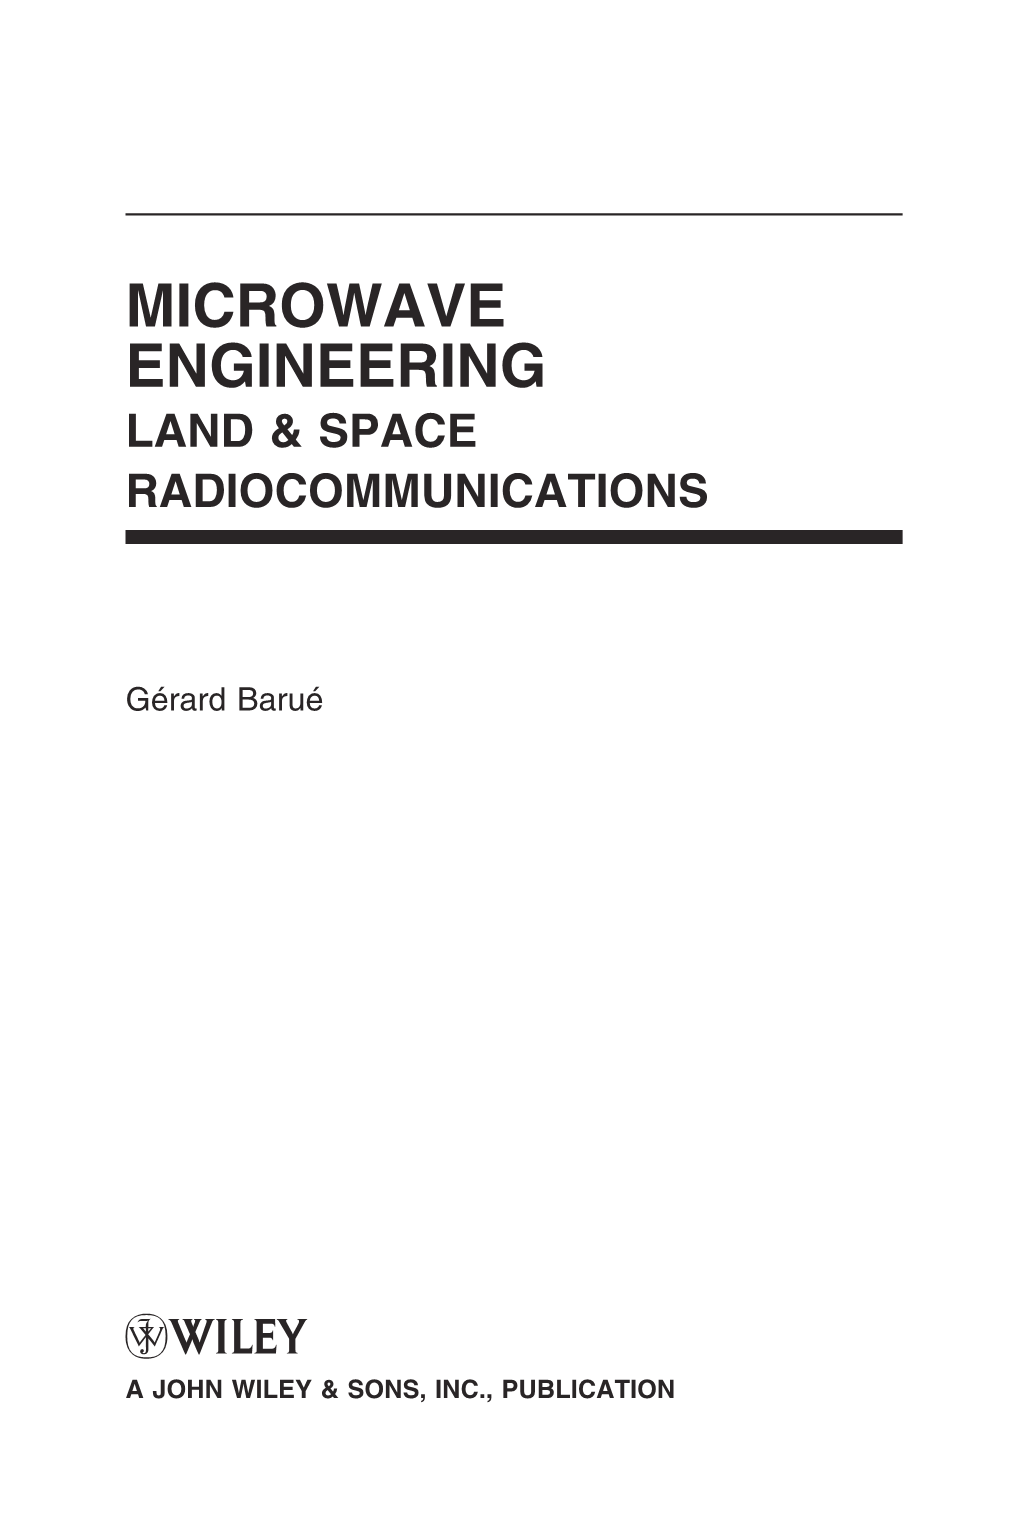 Microwave Engineering Land & Space Radiocommunications